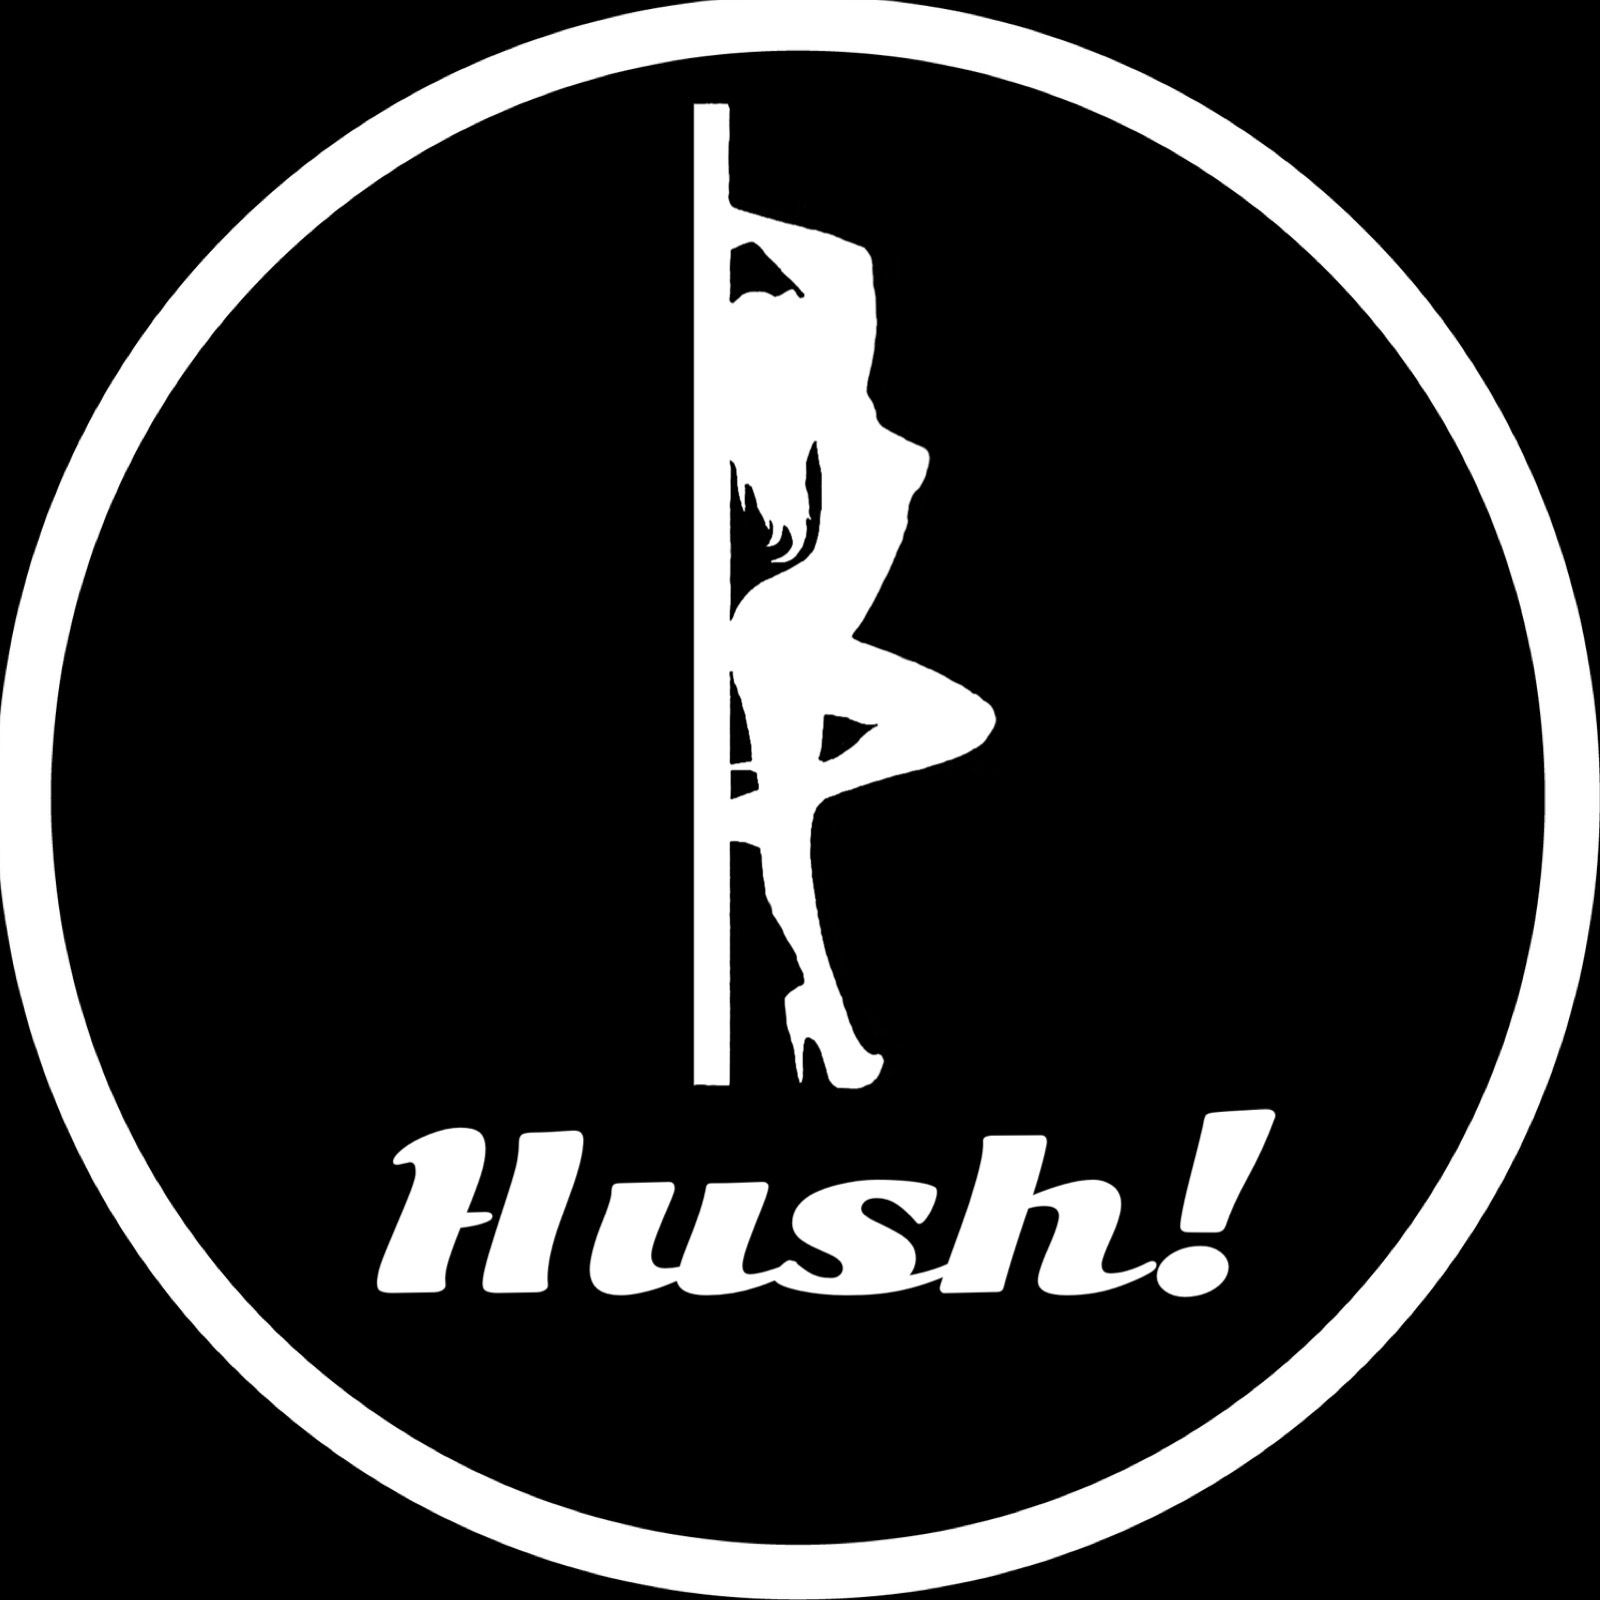 Hush! - Hush! Vol. 57- Alice Little Revisits